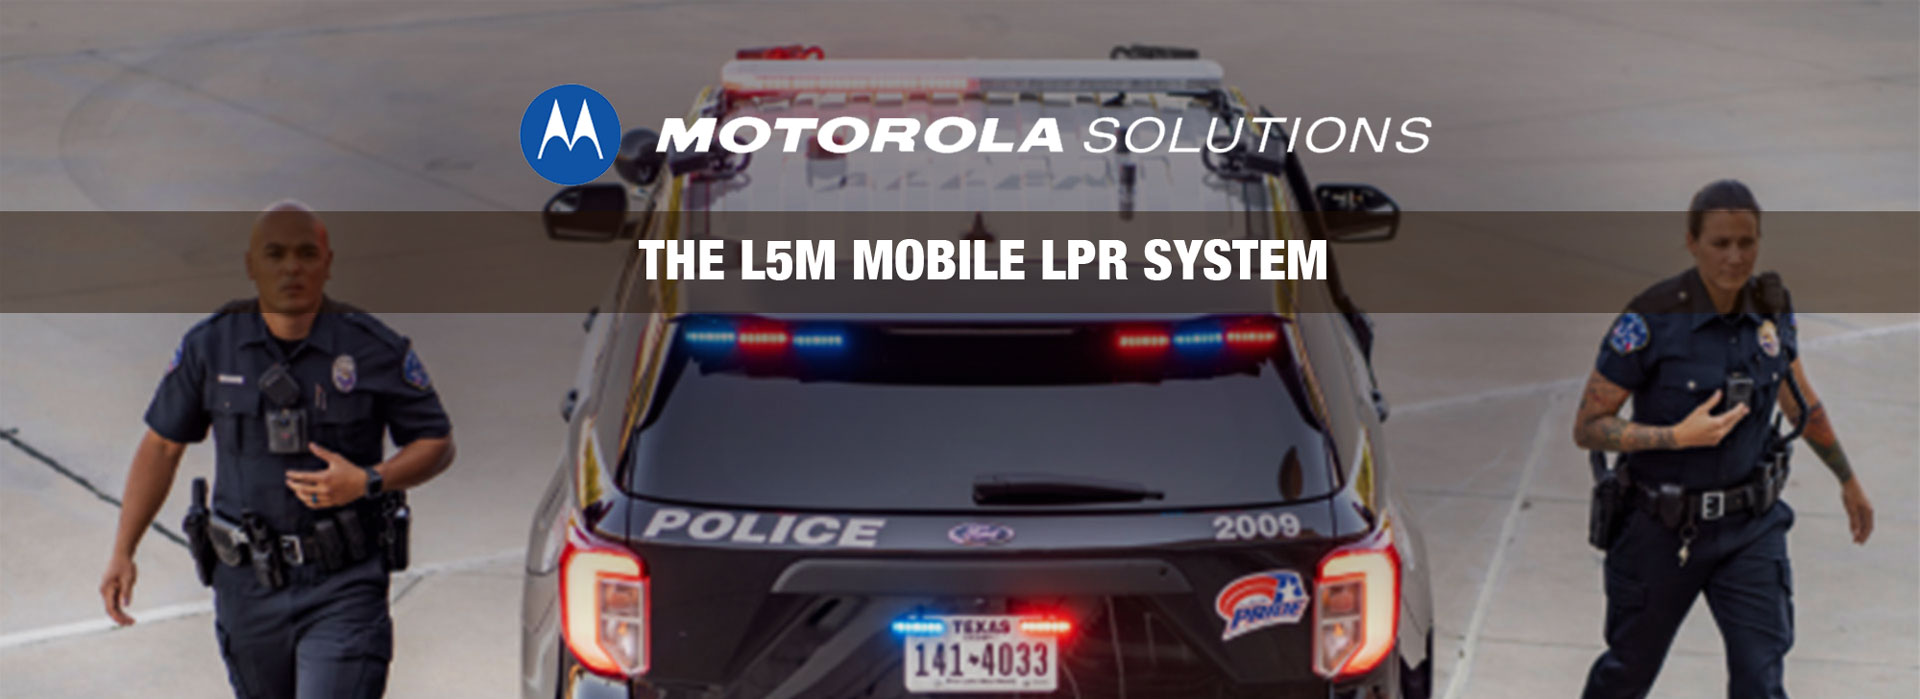 Motorola Solutions L5M